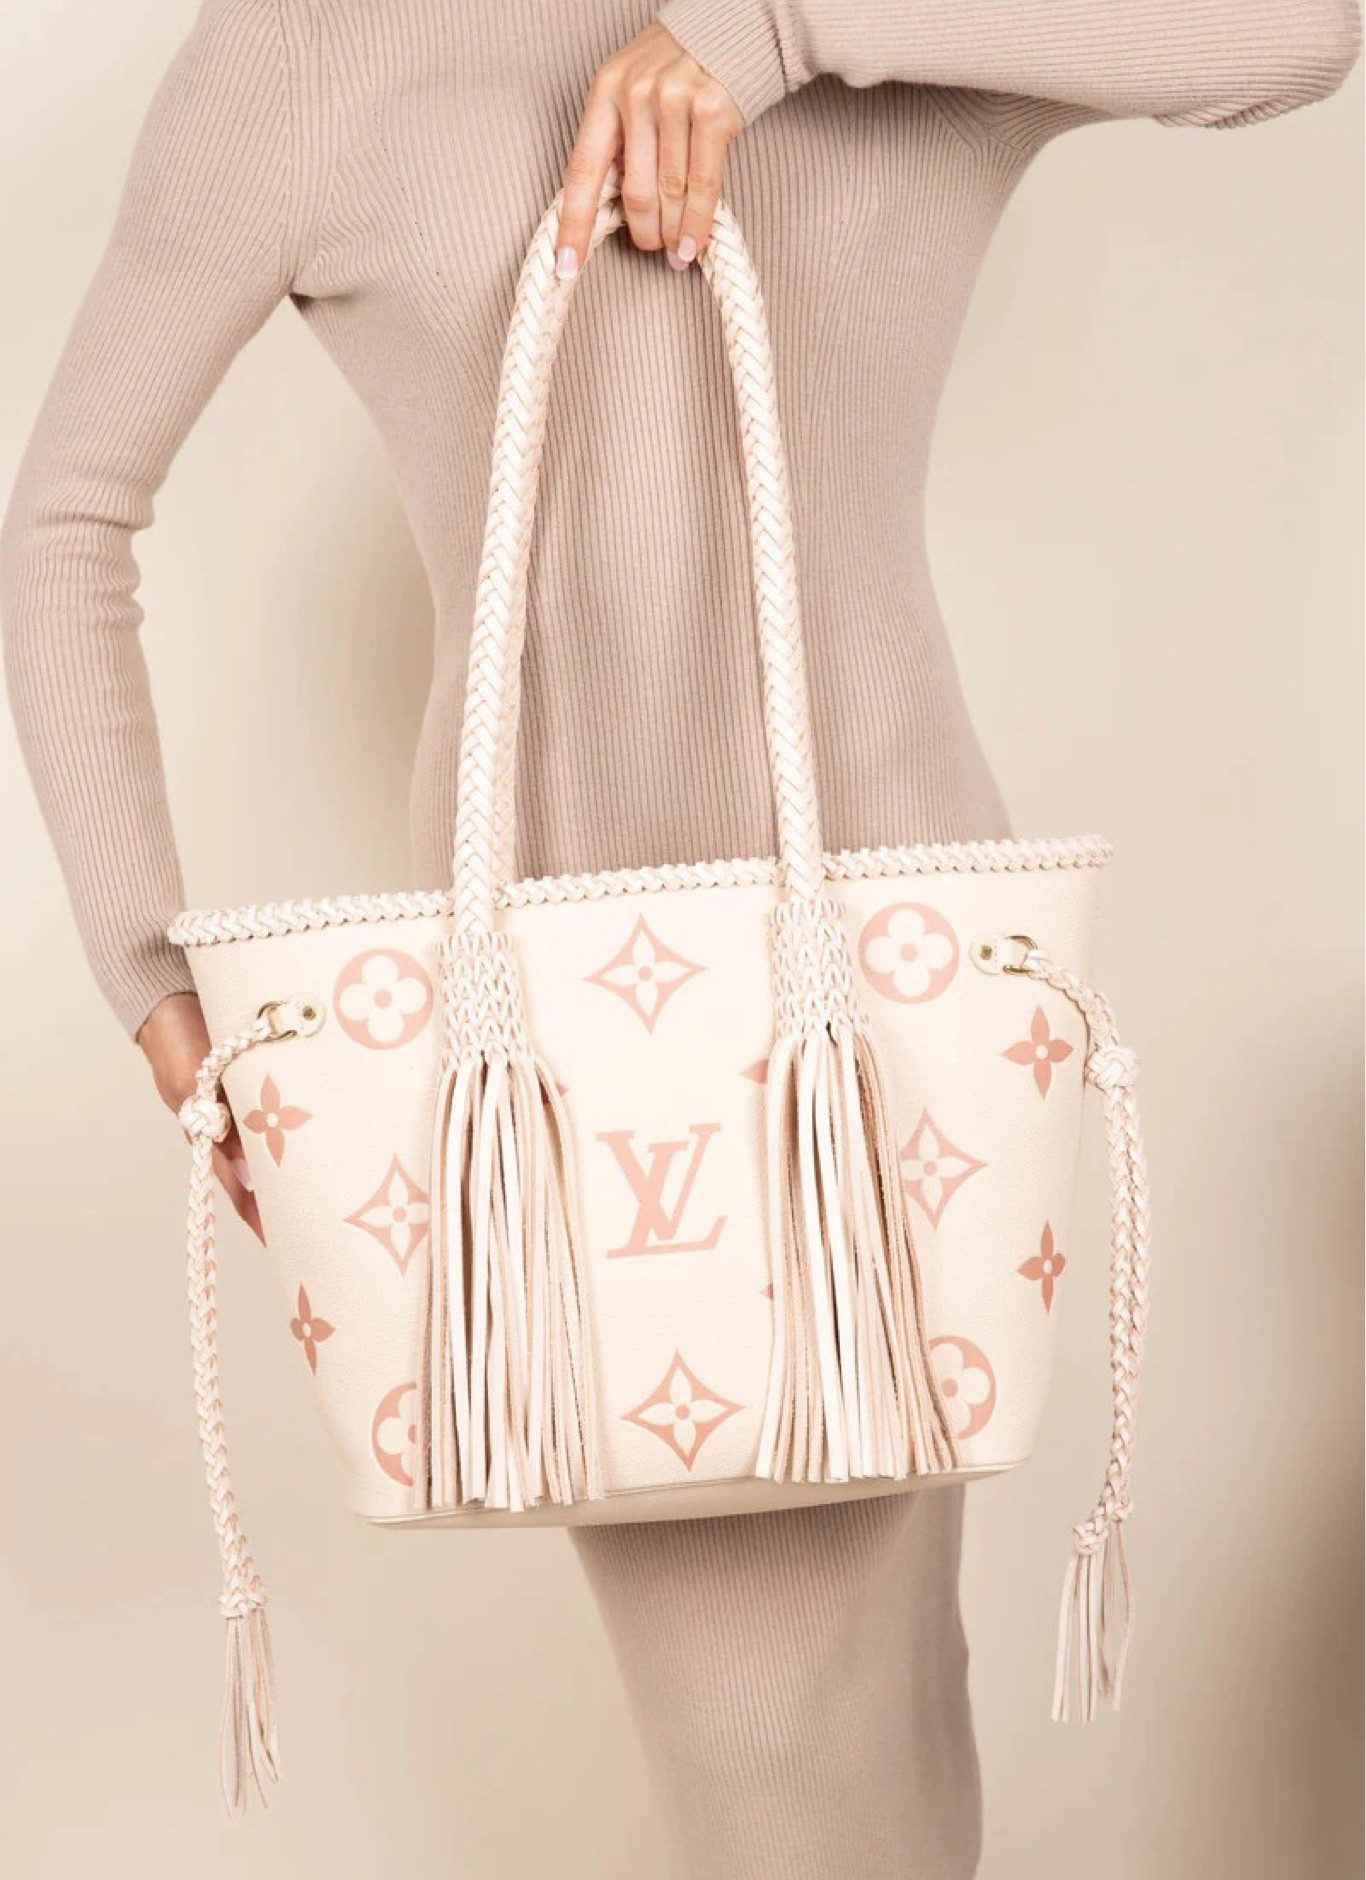 A $12 purse strap for your Louis Vuitton Speedy